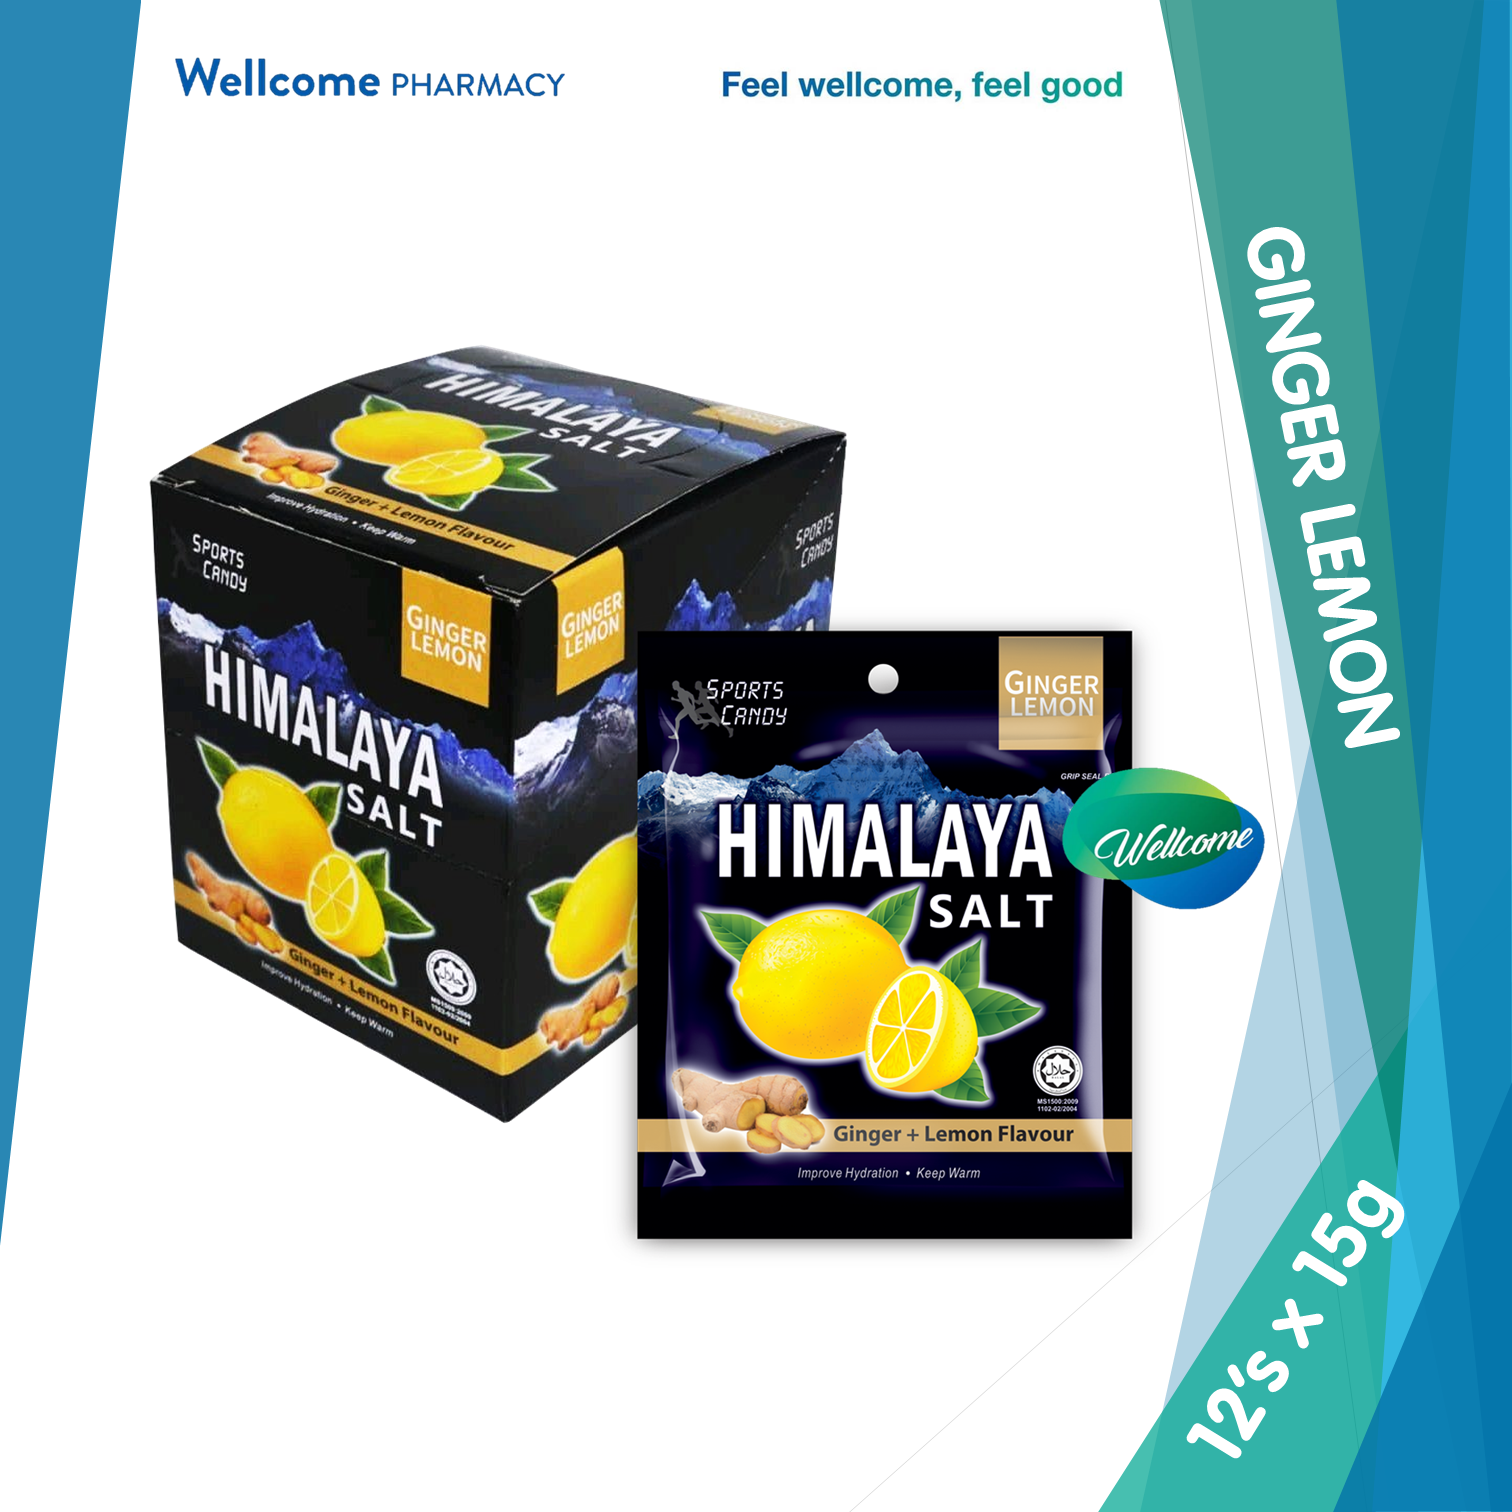 Big Foot Natural Himalaya Salt Mint Candy - Lemon Flavour (12 Packs Each) -  4 Box